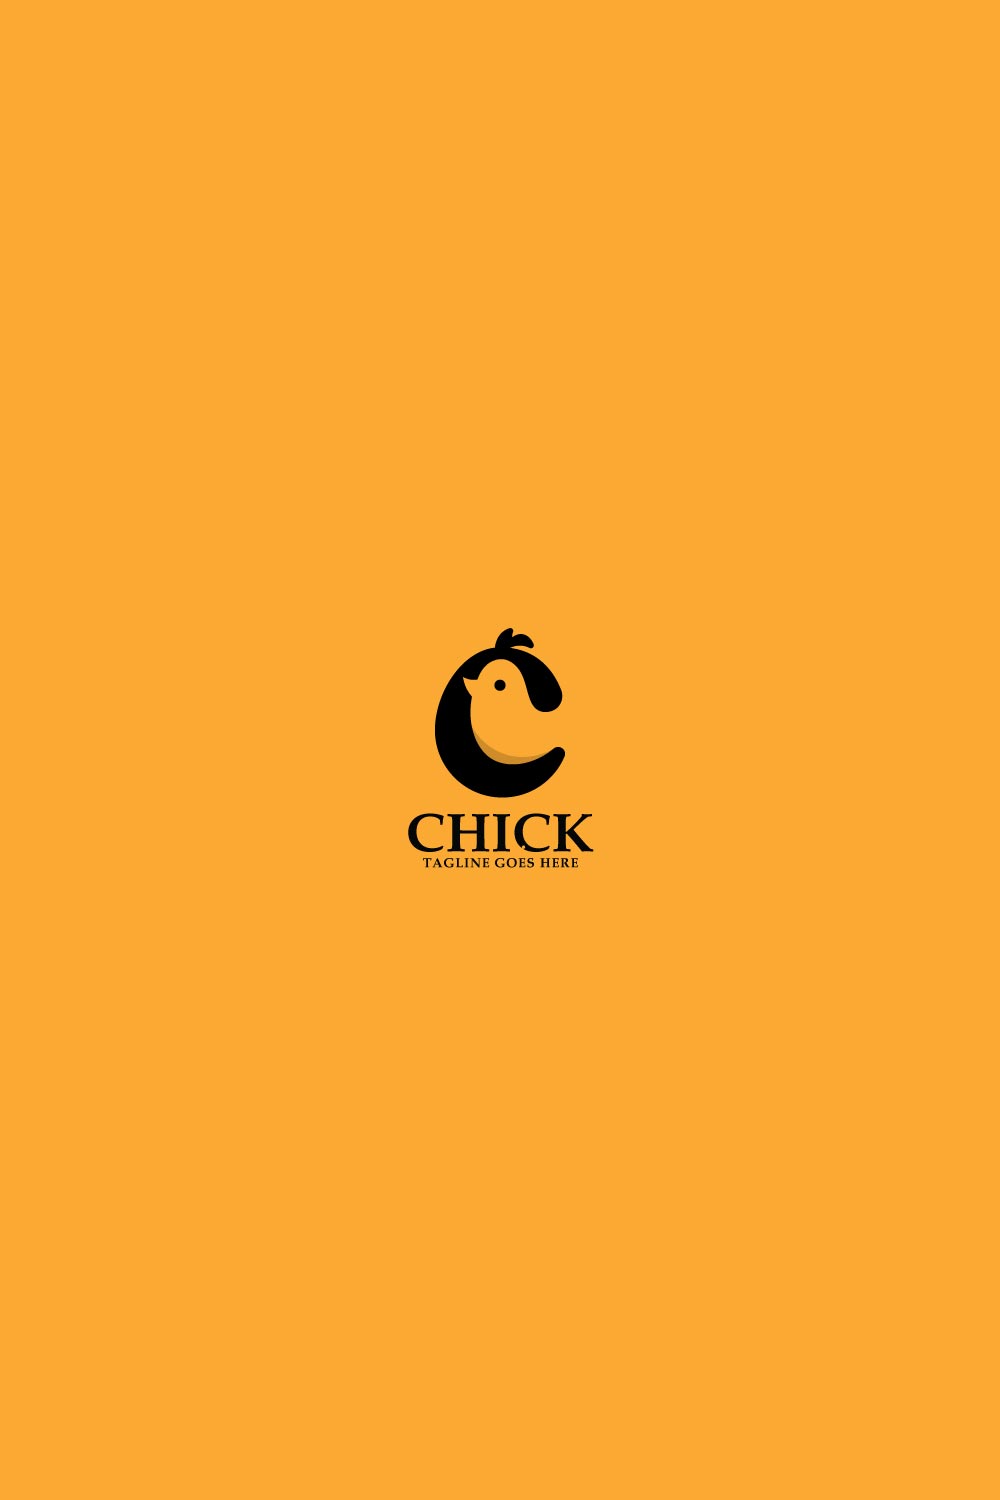 Letter C Chicken Logo Design vector icon symbol illustration Chicken minimalist Template pinterest preview image.